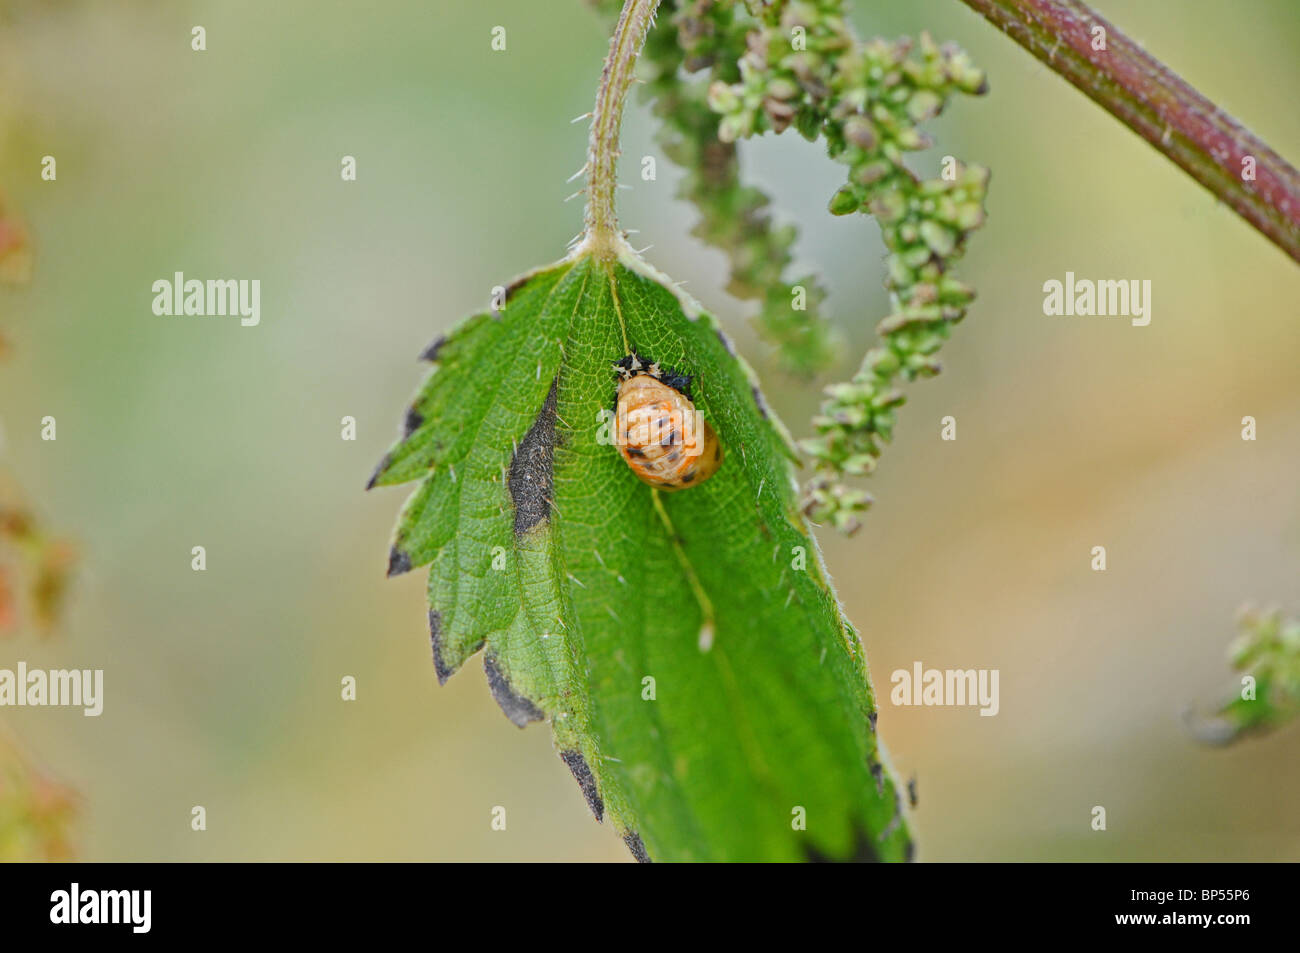 Pupa of Harlequin ladybird (Harmonia axyridis succinea)  on Common Stinging Nettle, Urtica dioica. Stock Photo